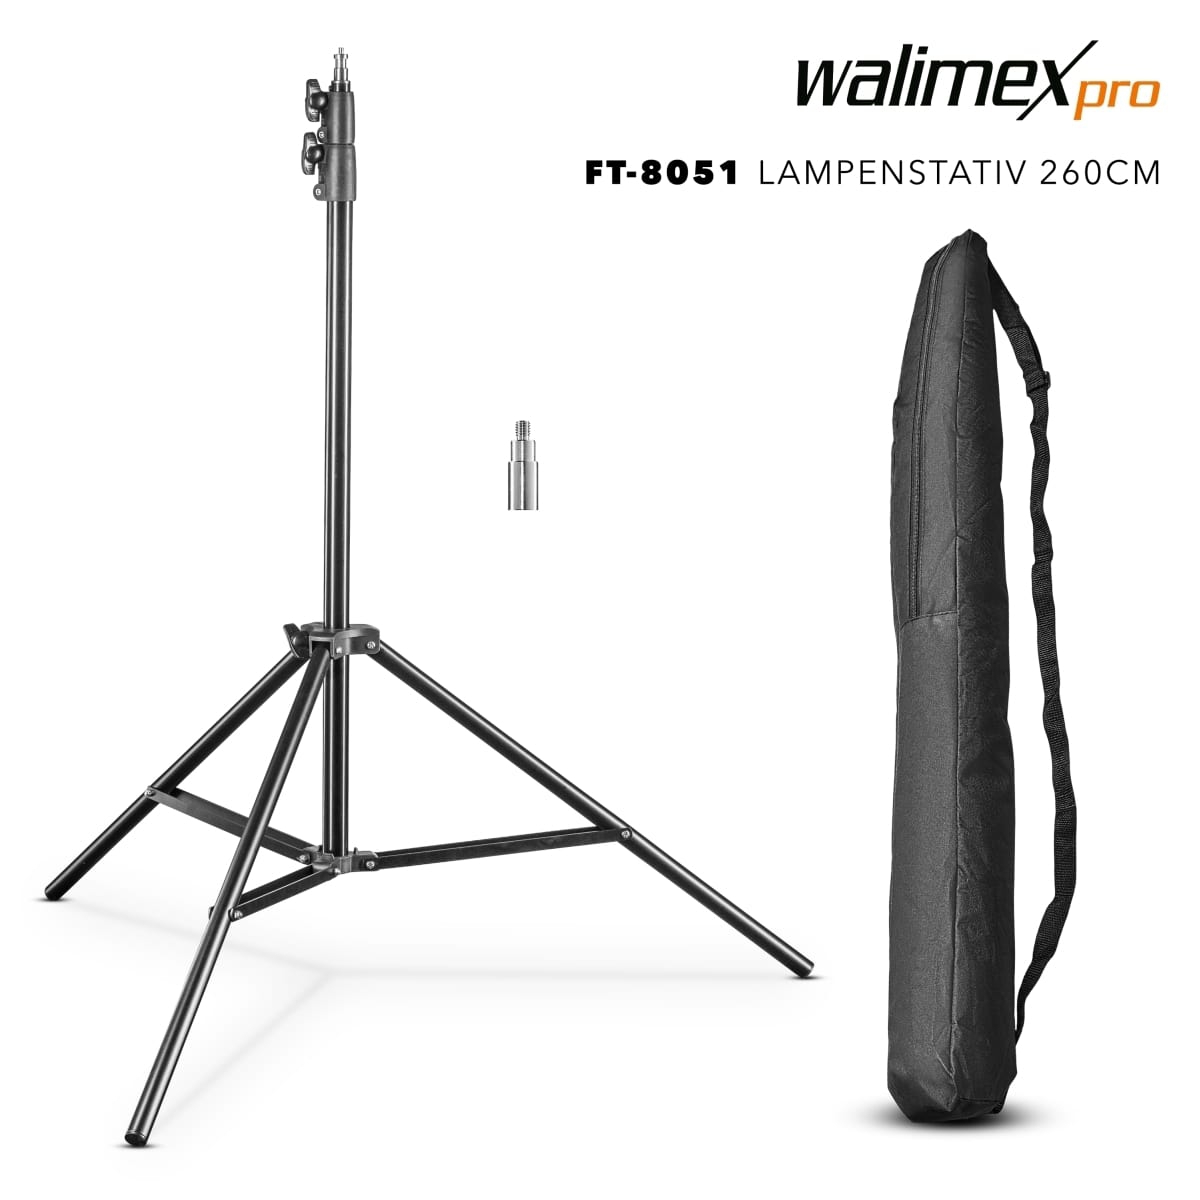 Walimex Pro FT-8051 Lampenstativ 260cm